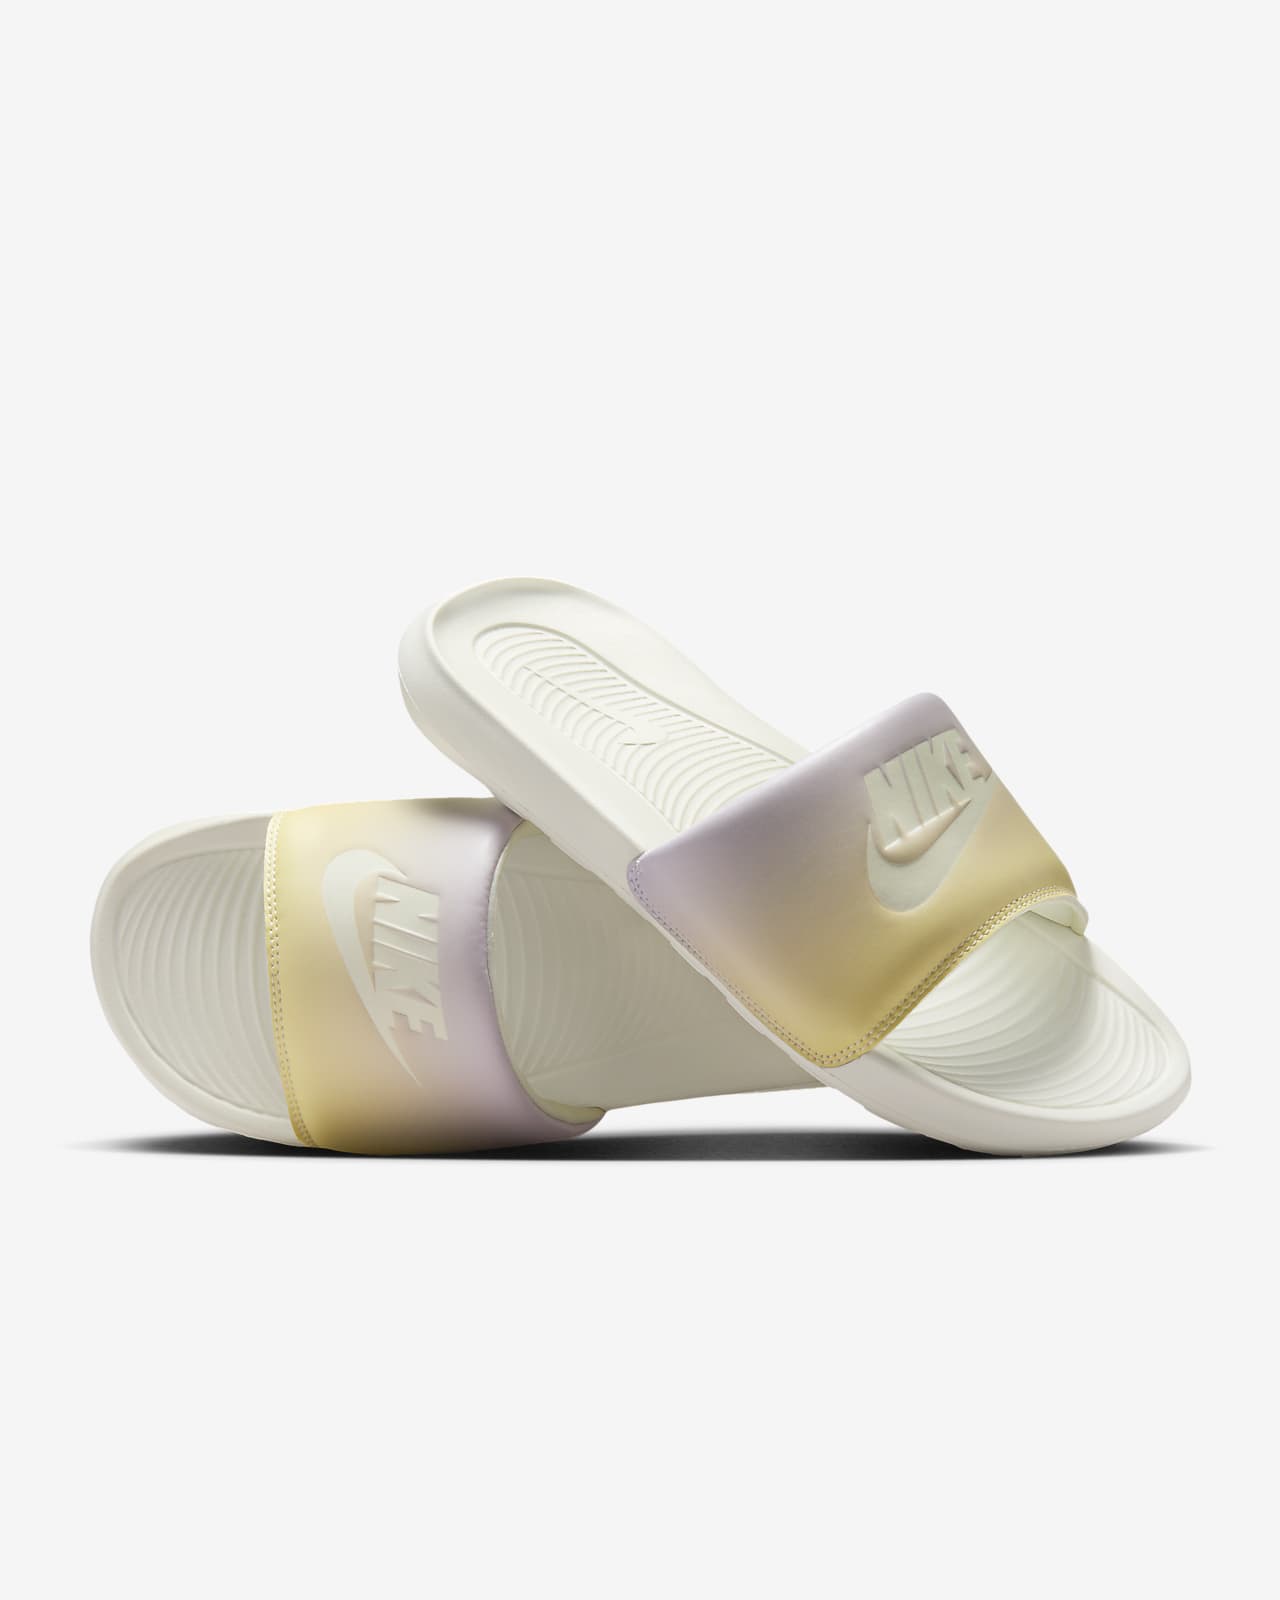 Nike Benassi Slides Sandals Flip Flop Swoosh Black White Women's US Size 9